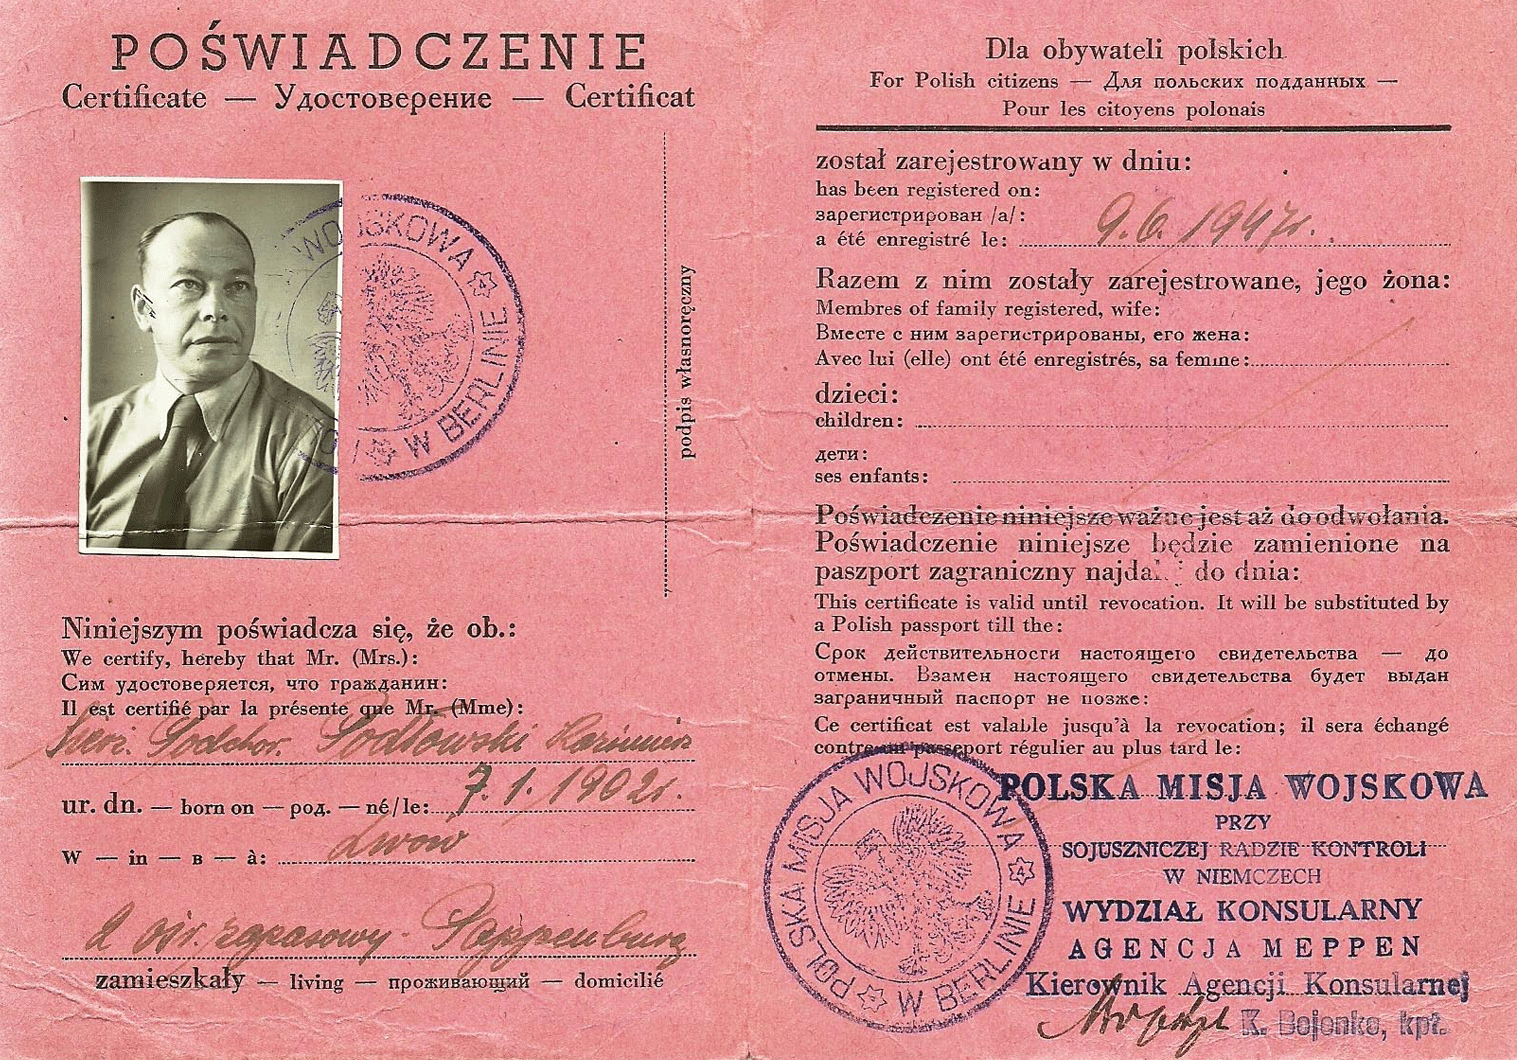 WW Polish Military Mission in Germany